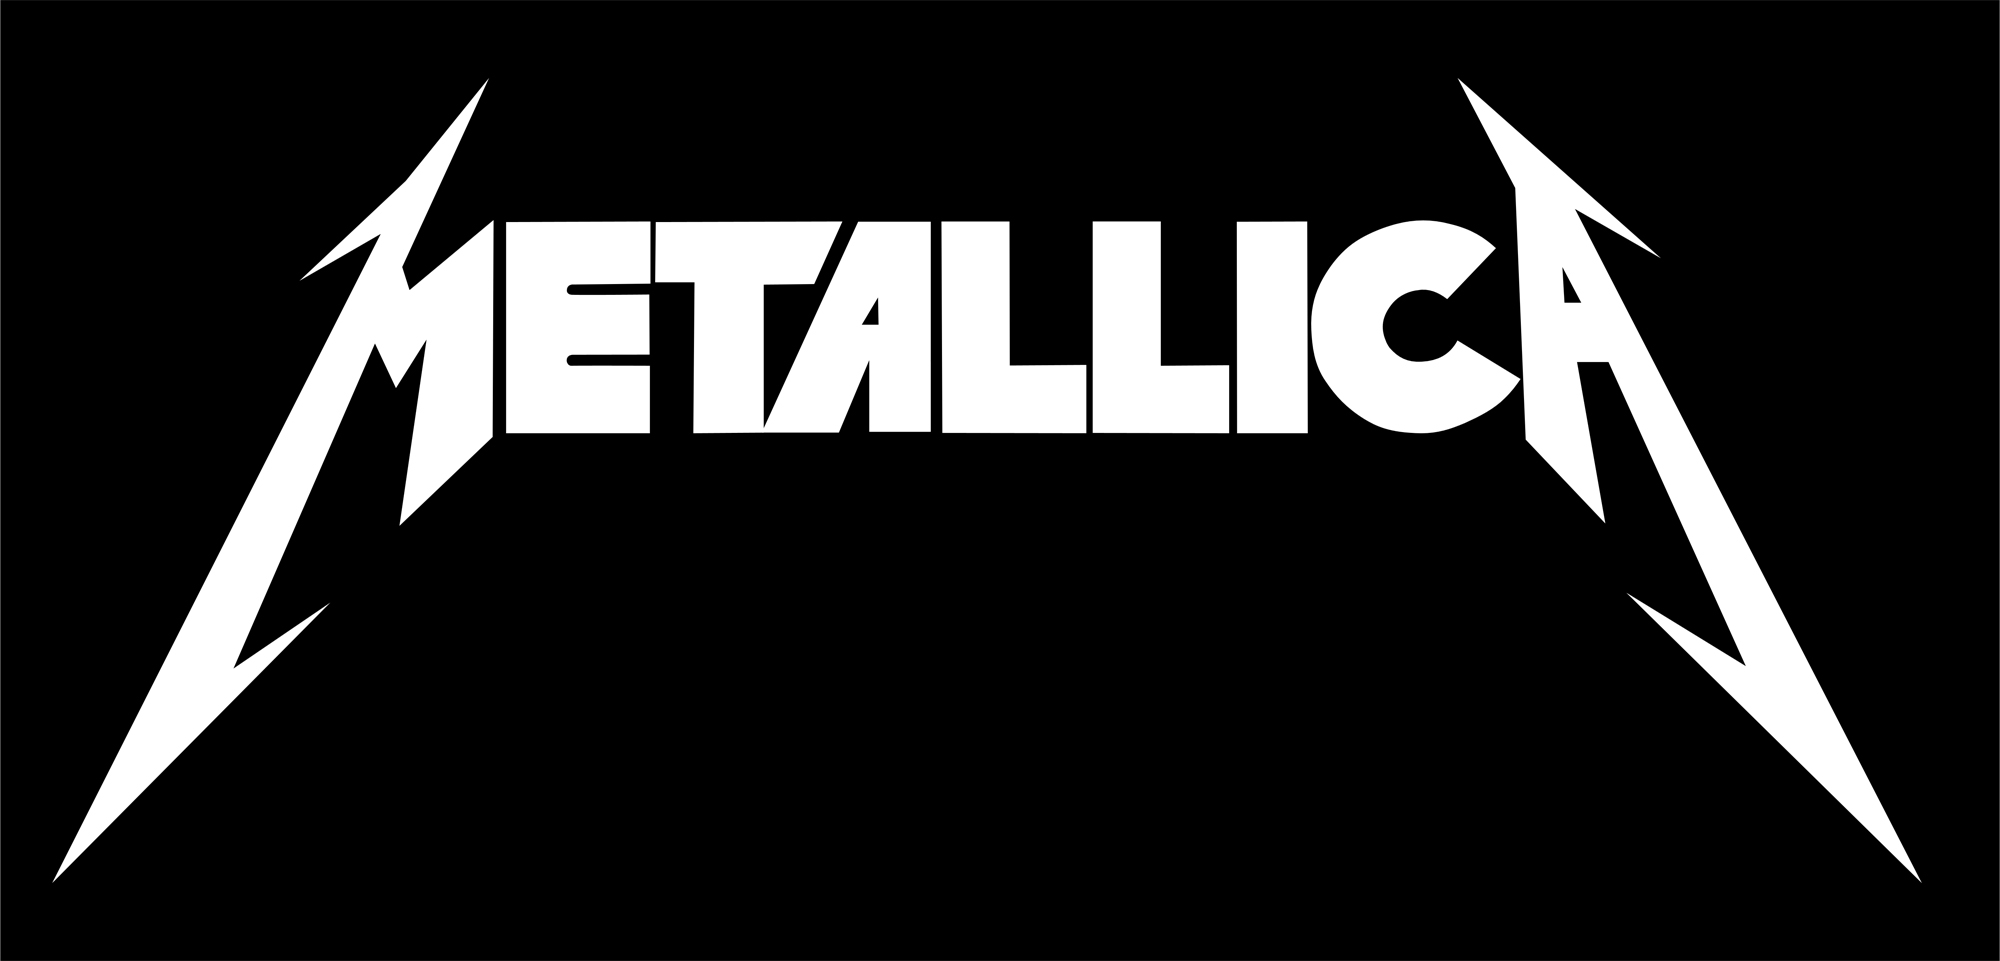 Metallica history